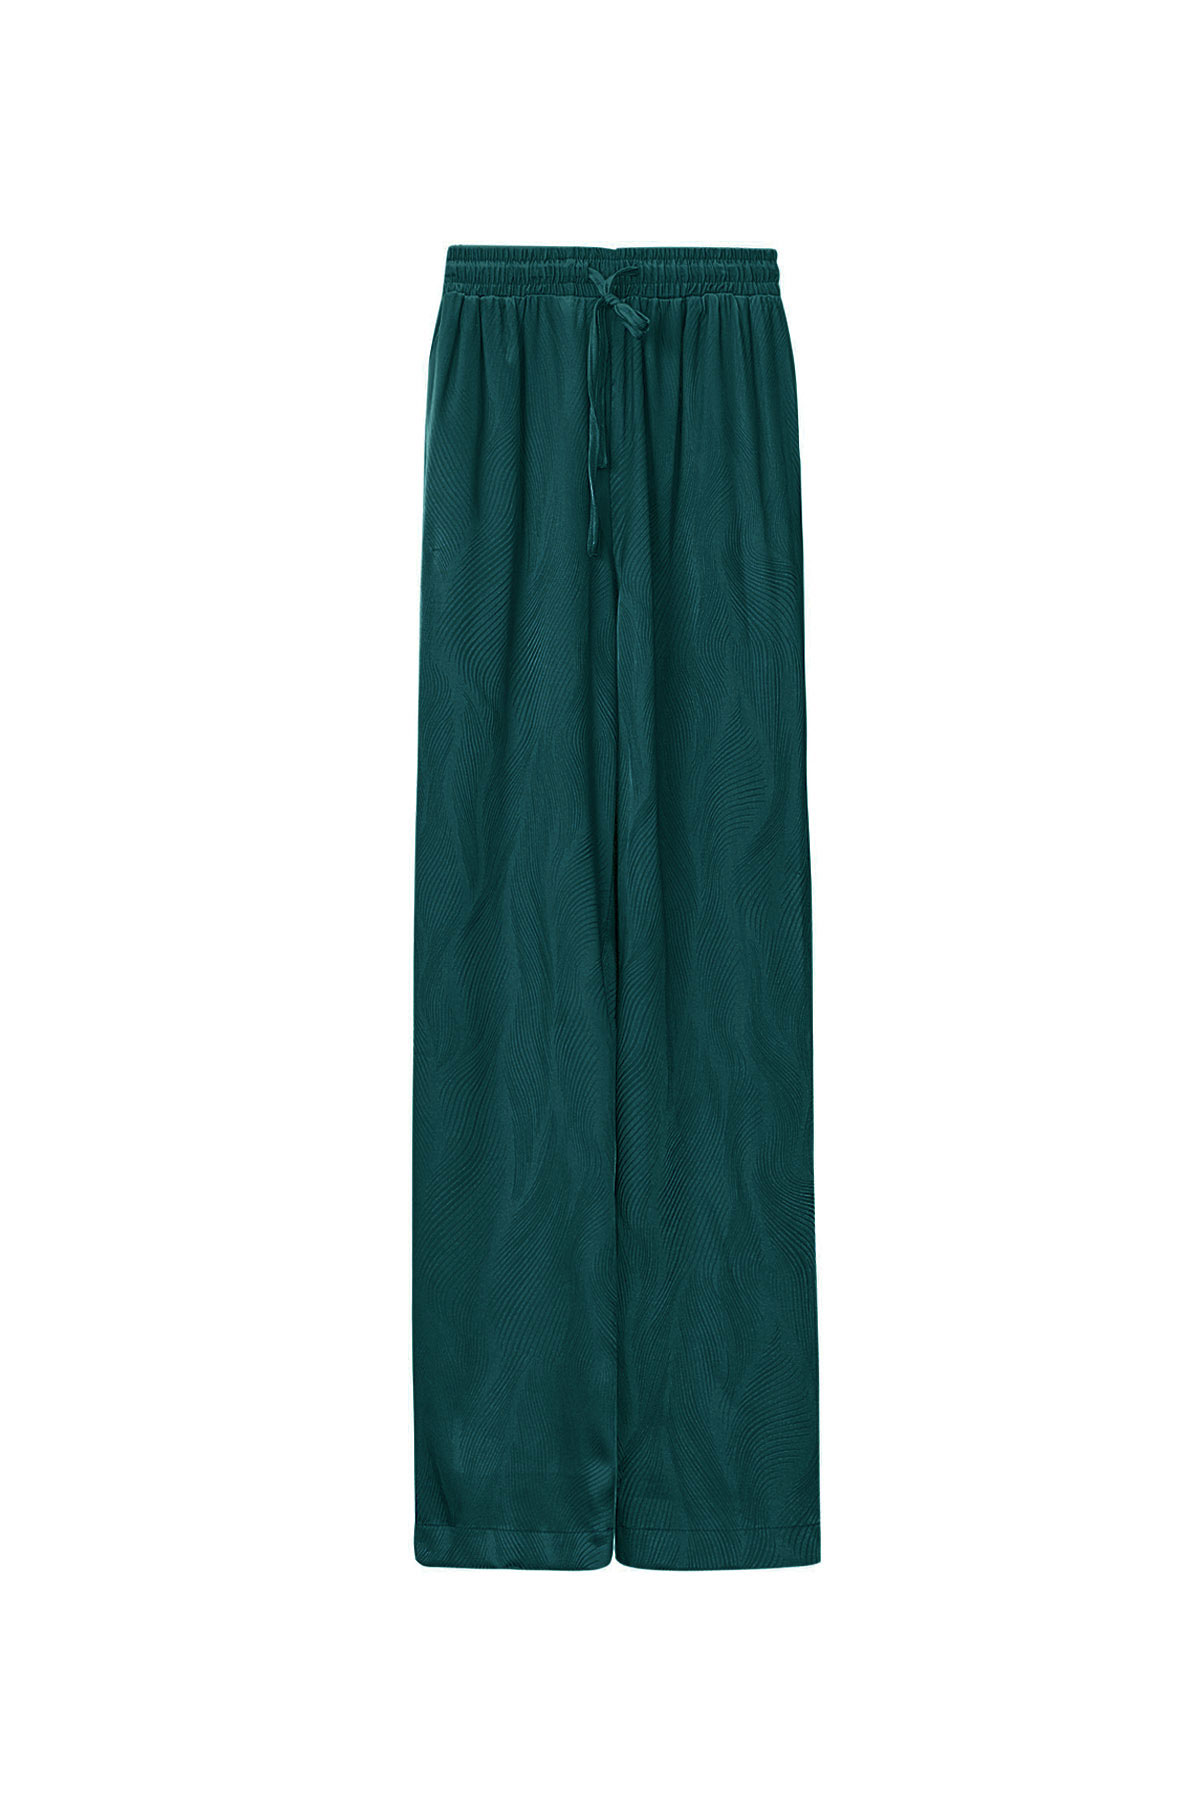 Satin pants with print - dark green - M